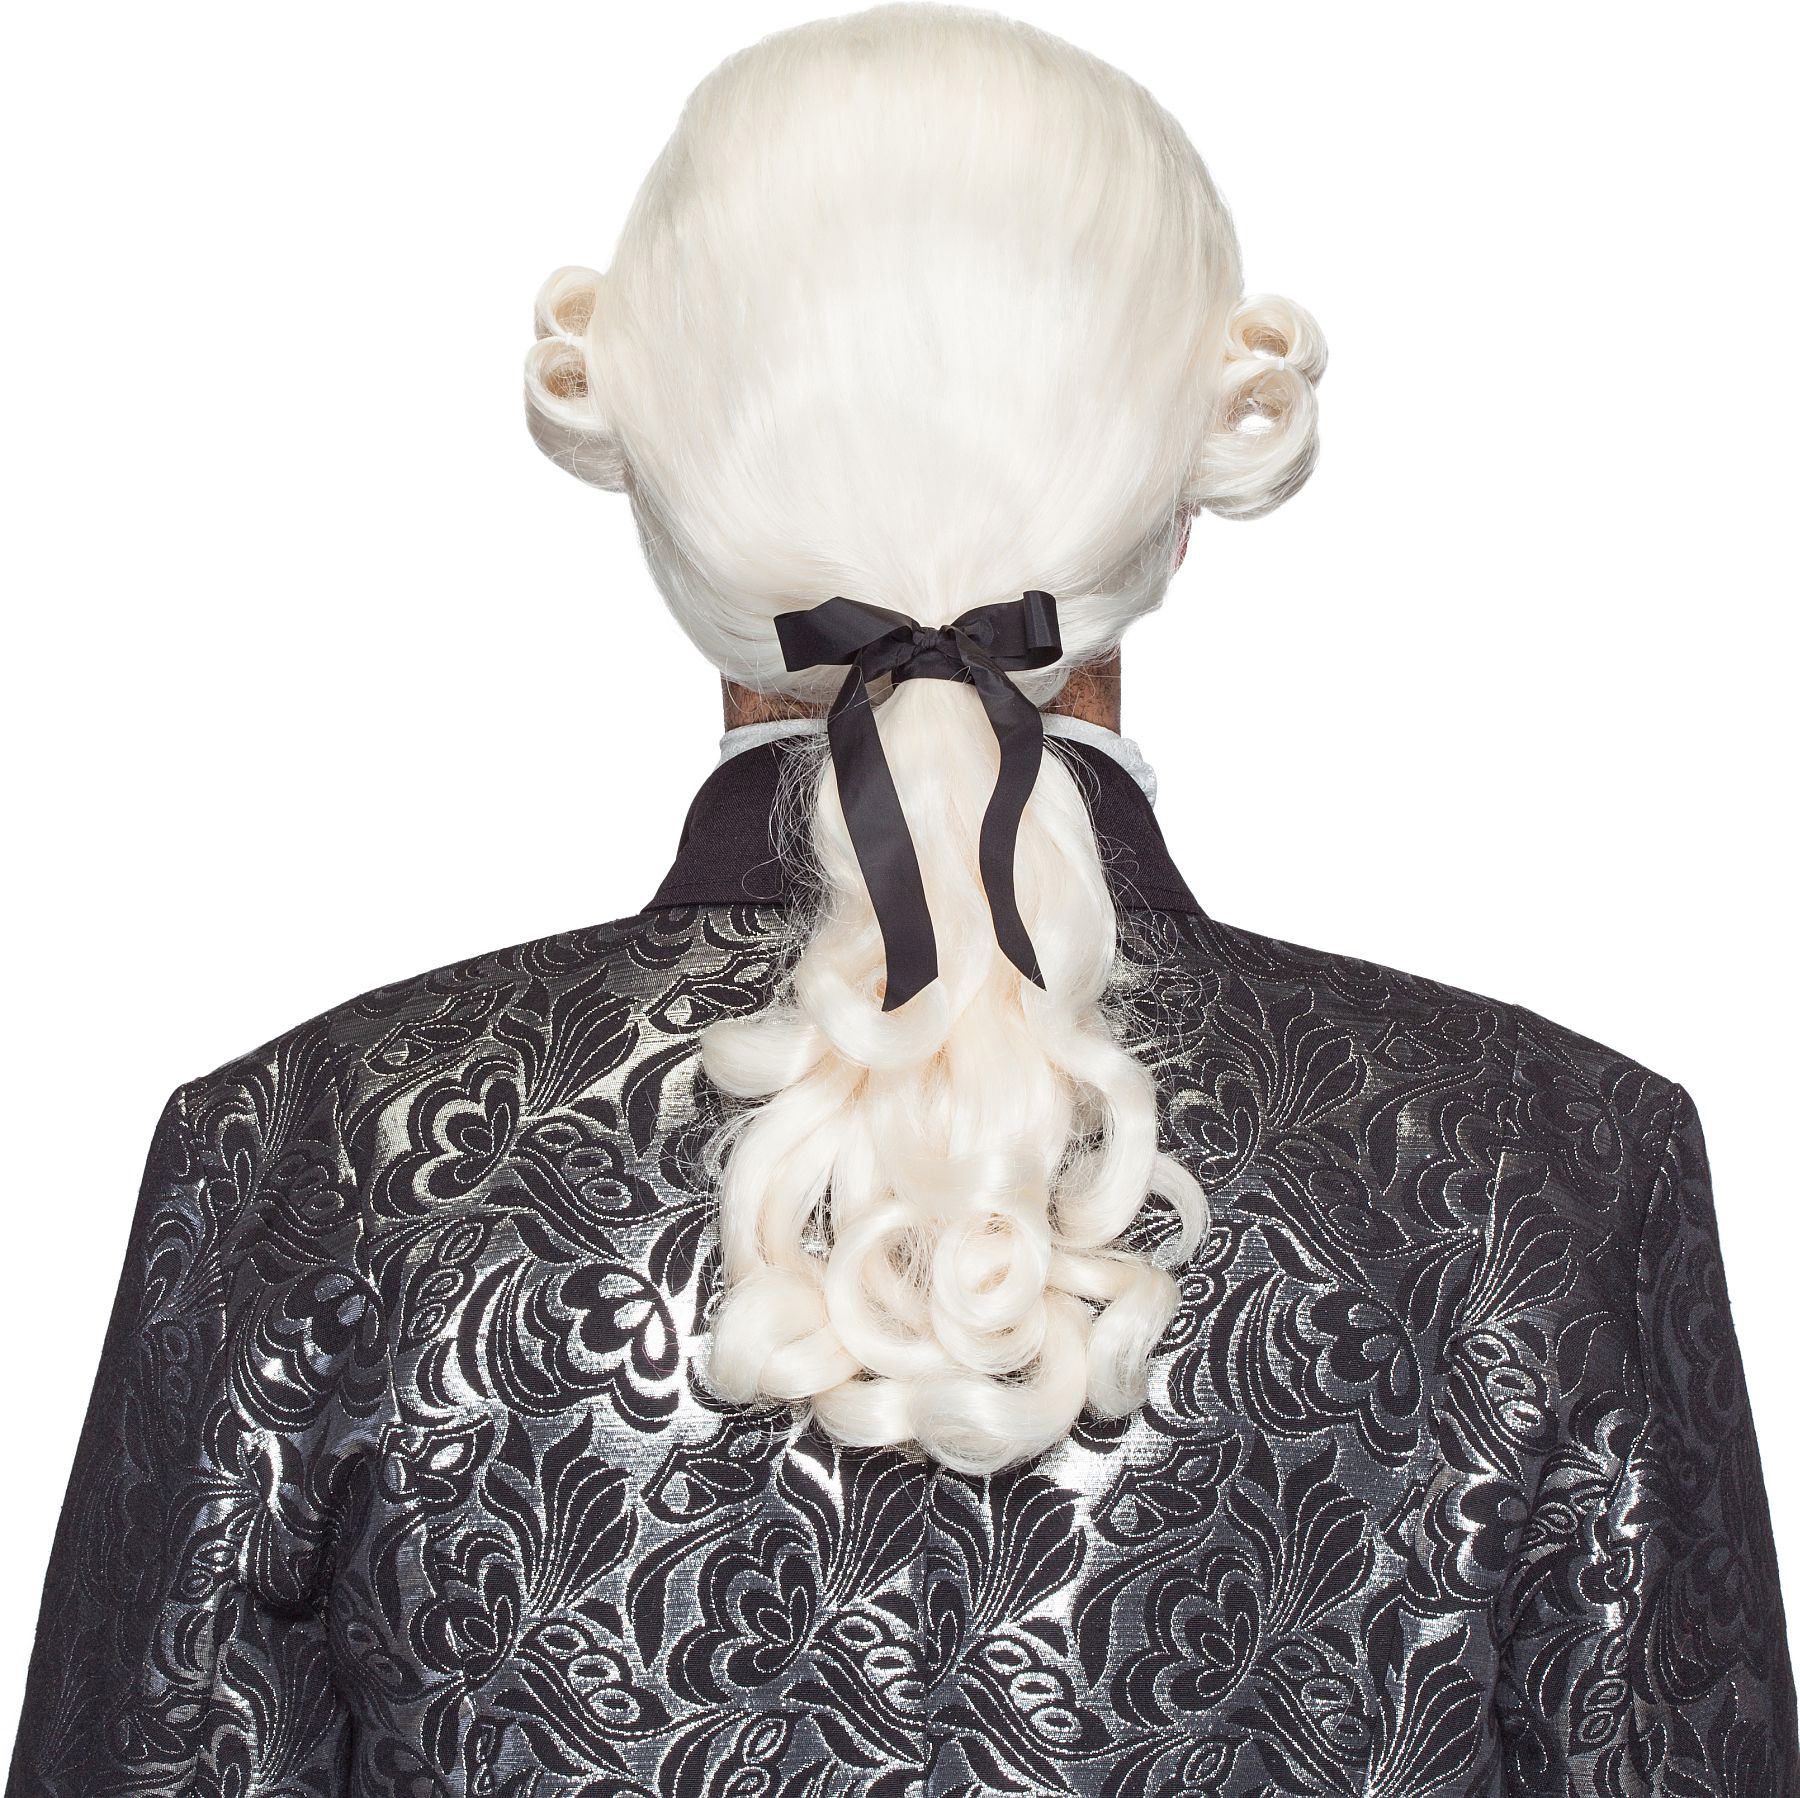 Braided baroque men's wig, white